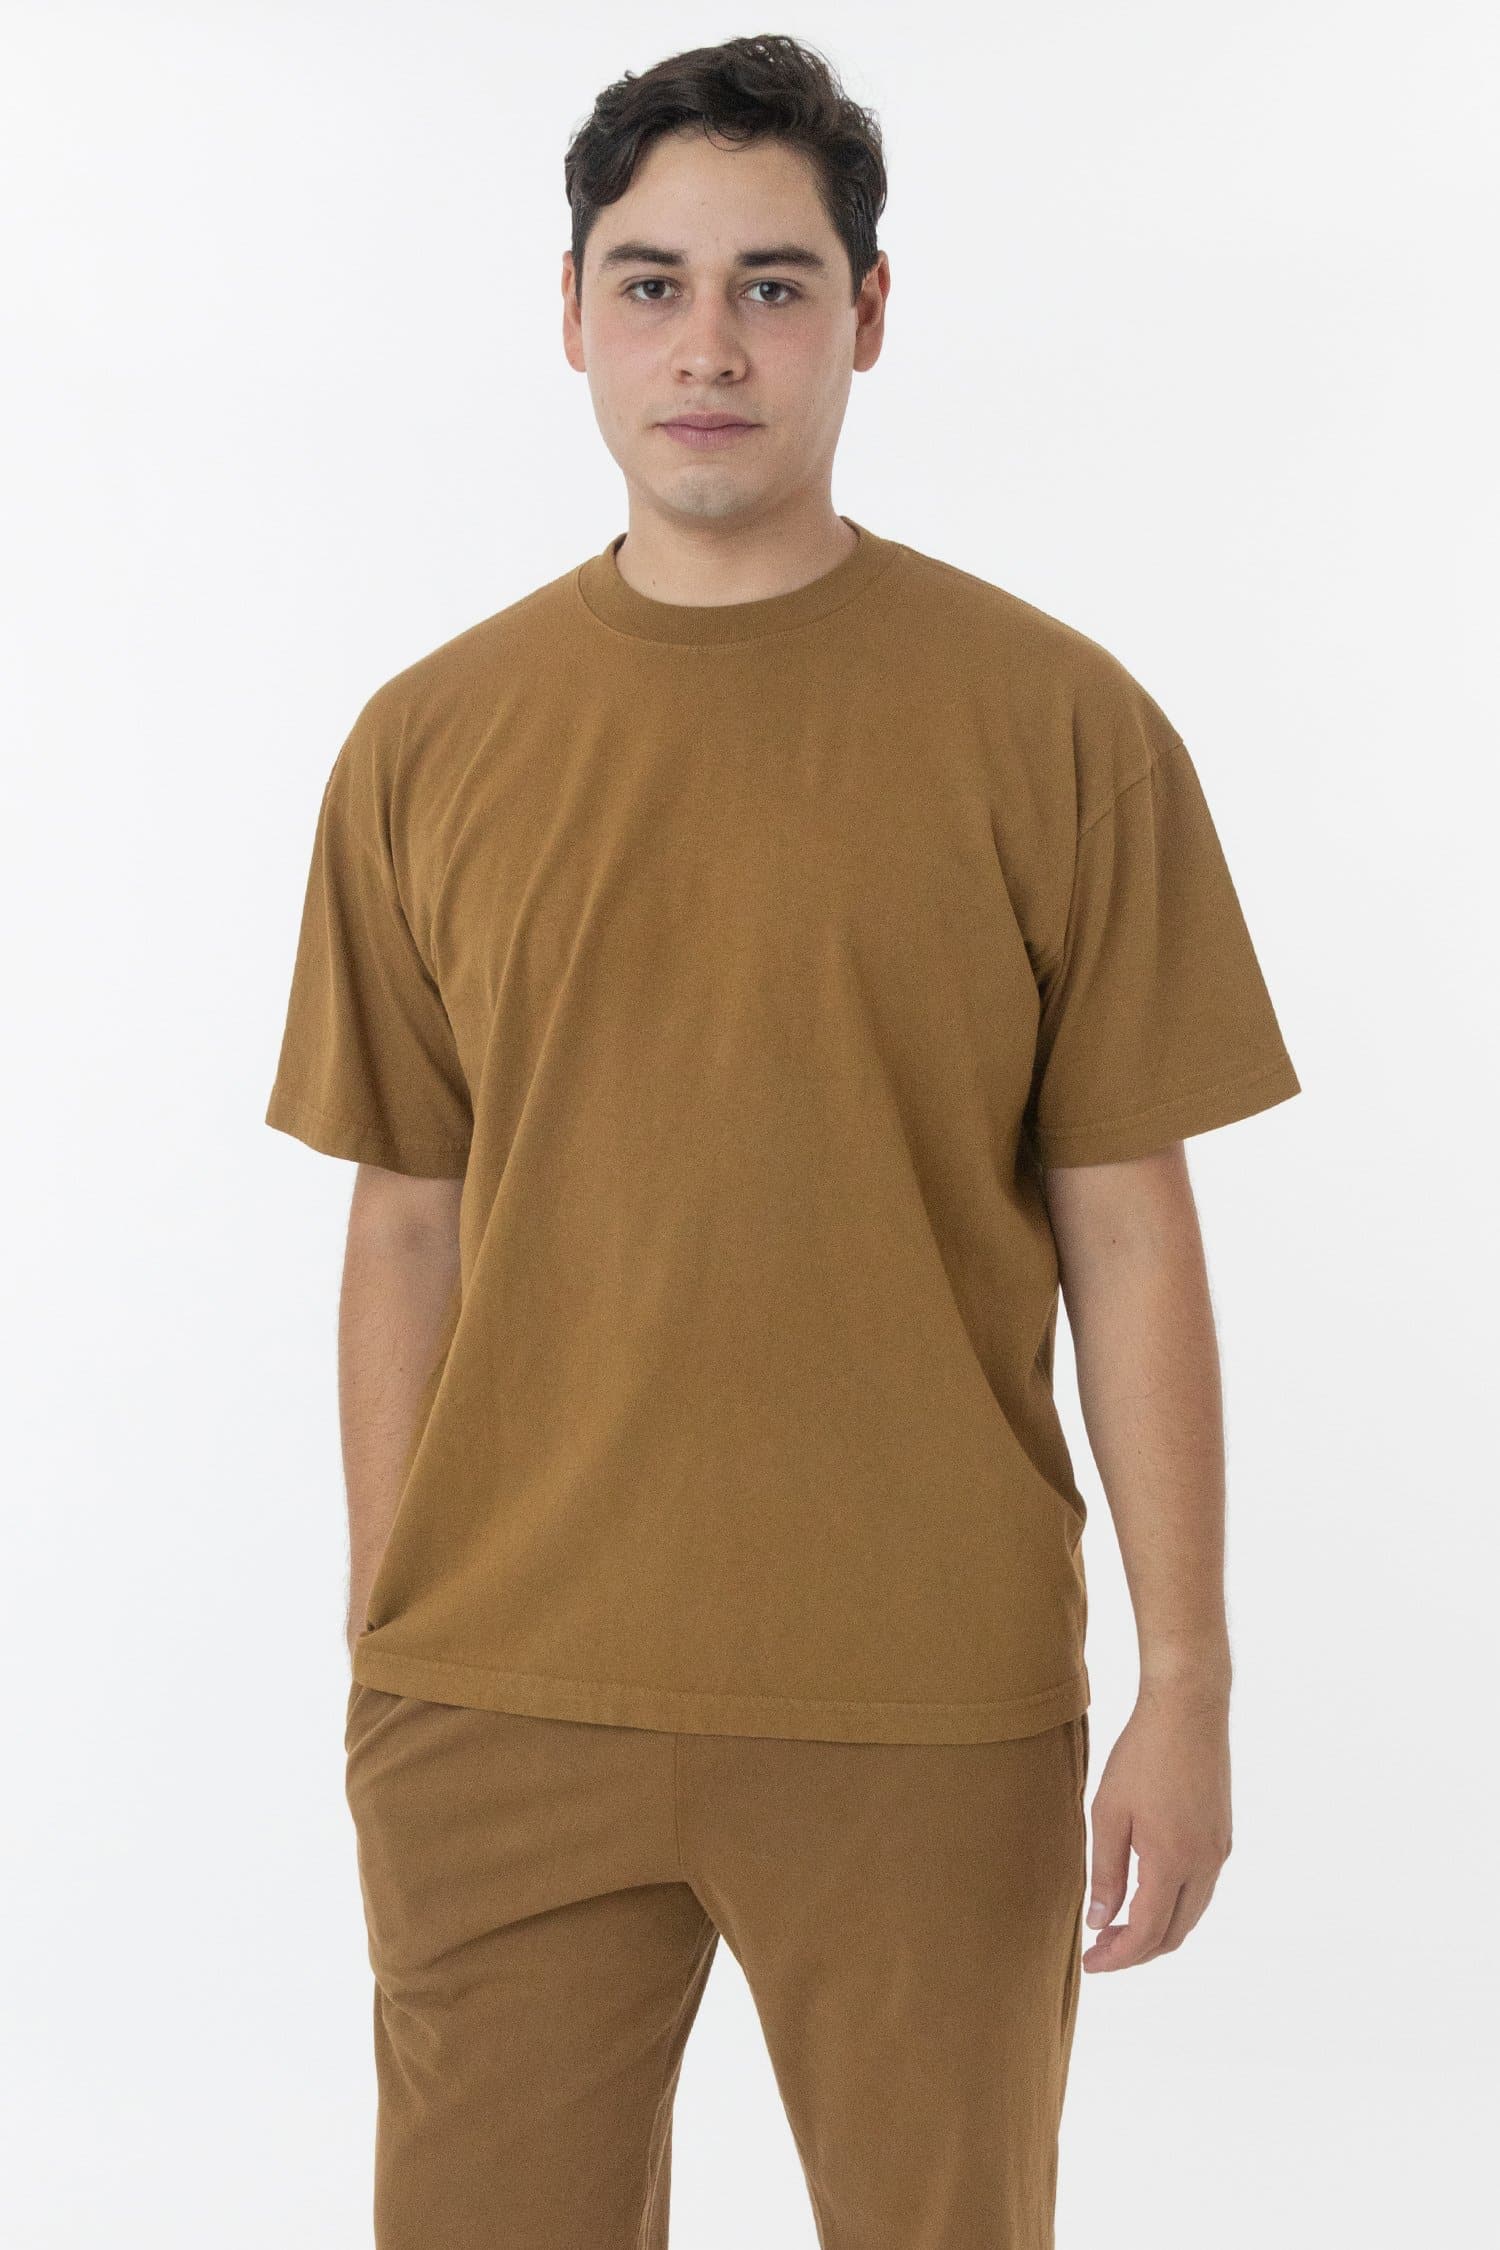 Los Angeles Apparel | Shirt for Men in Black, Size Large